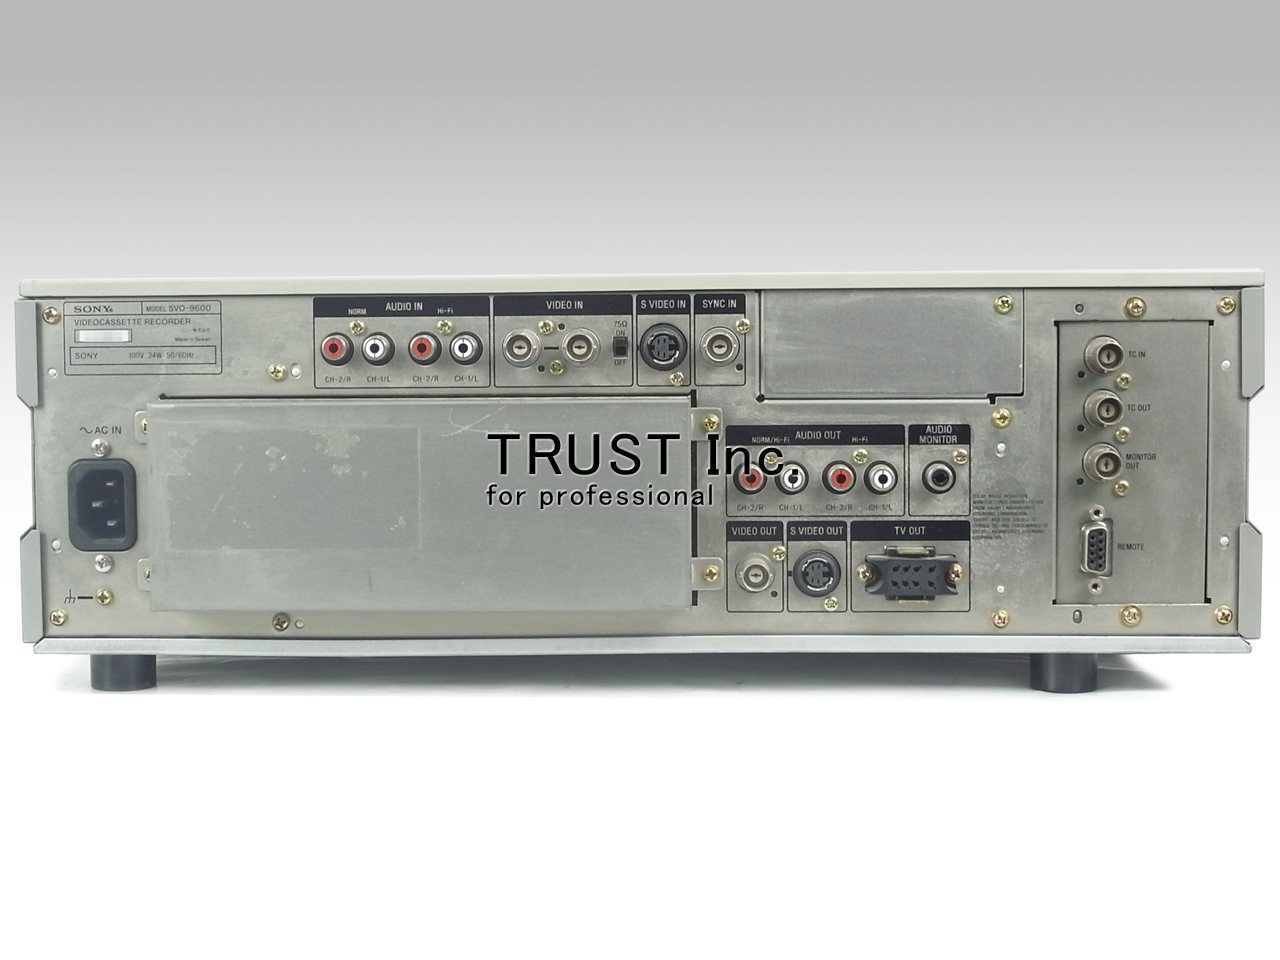 SVO-9600 / S-VHS Recorder【中古放送用・業務用 映像機器・音響機器の 